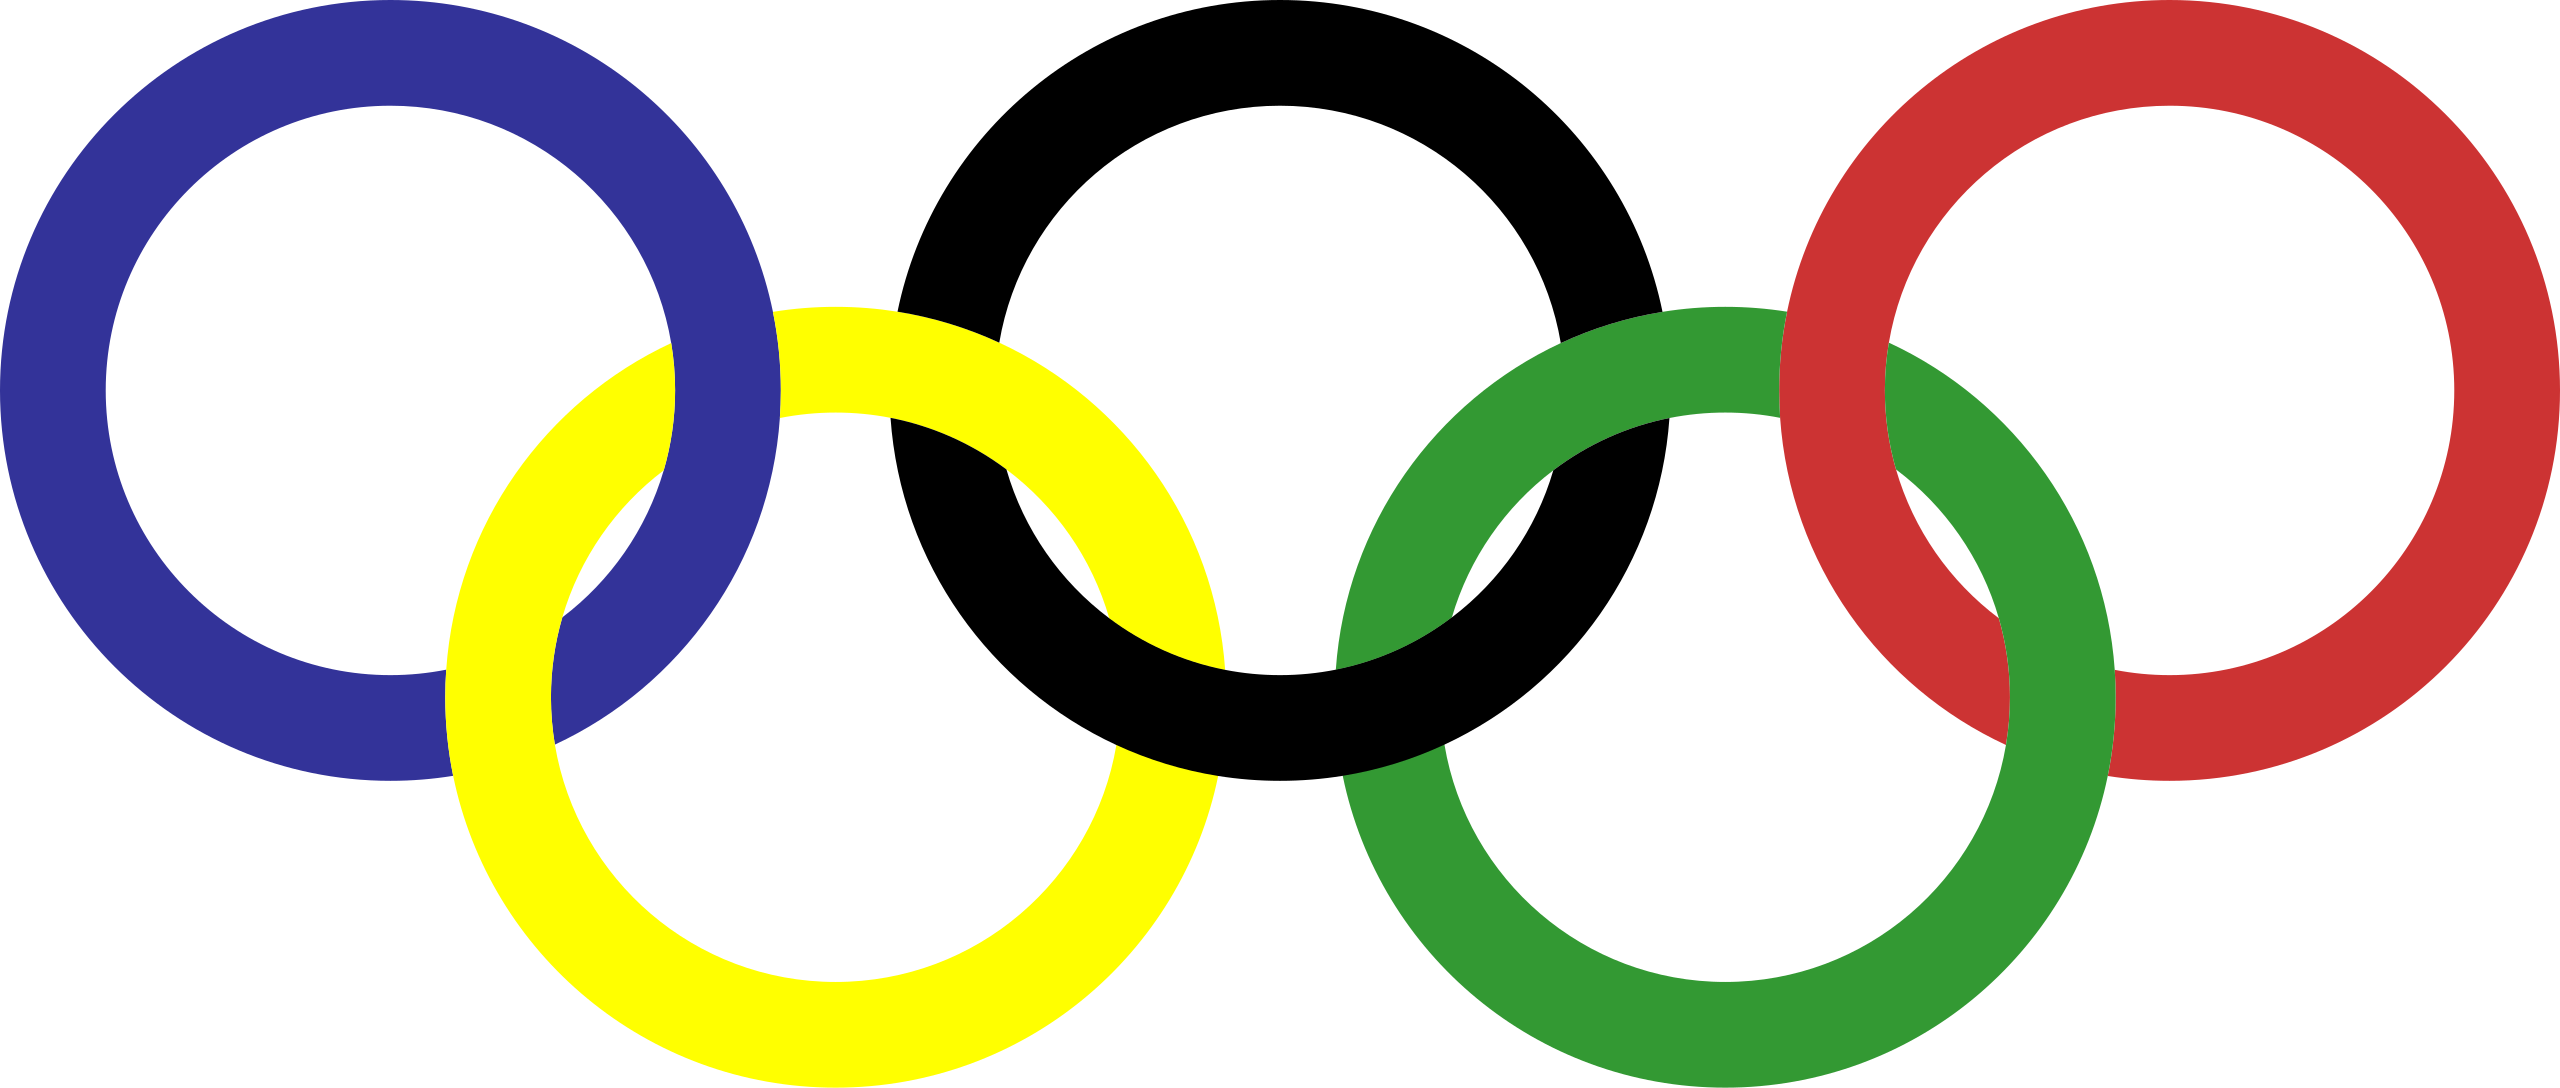 File:Olympics rings (1913-1986).svg - Wikipedia